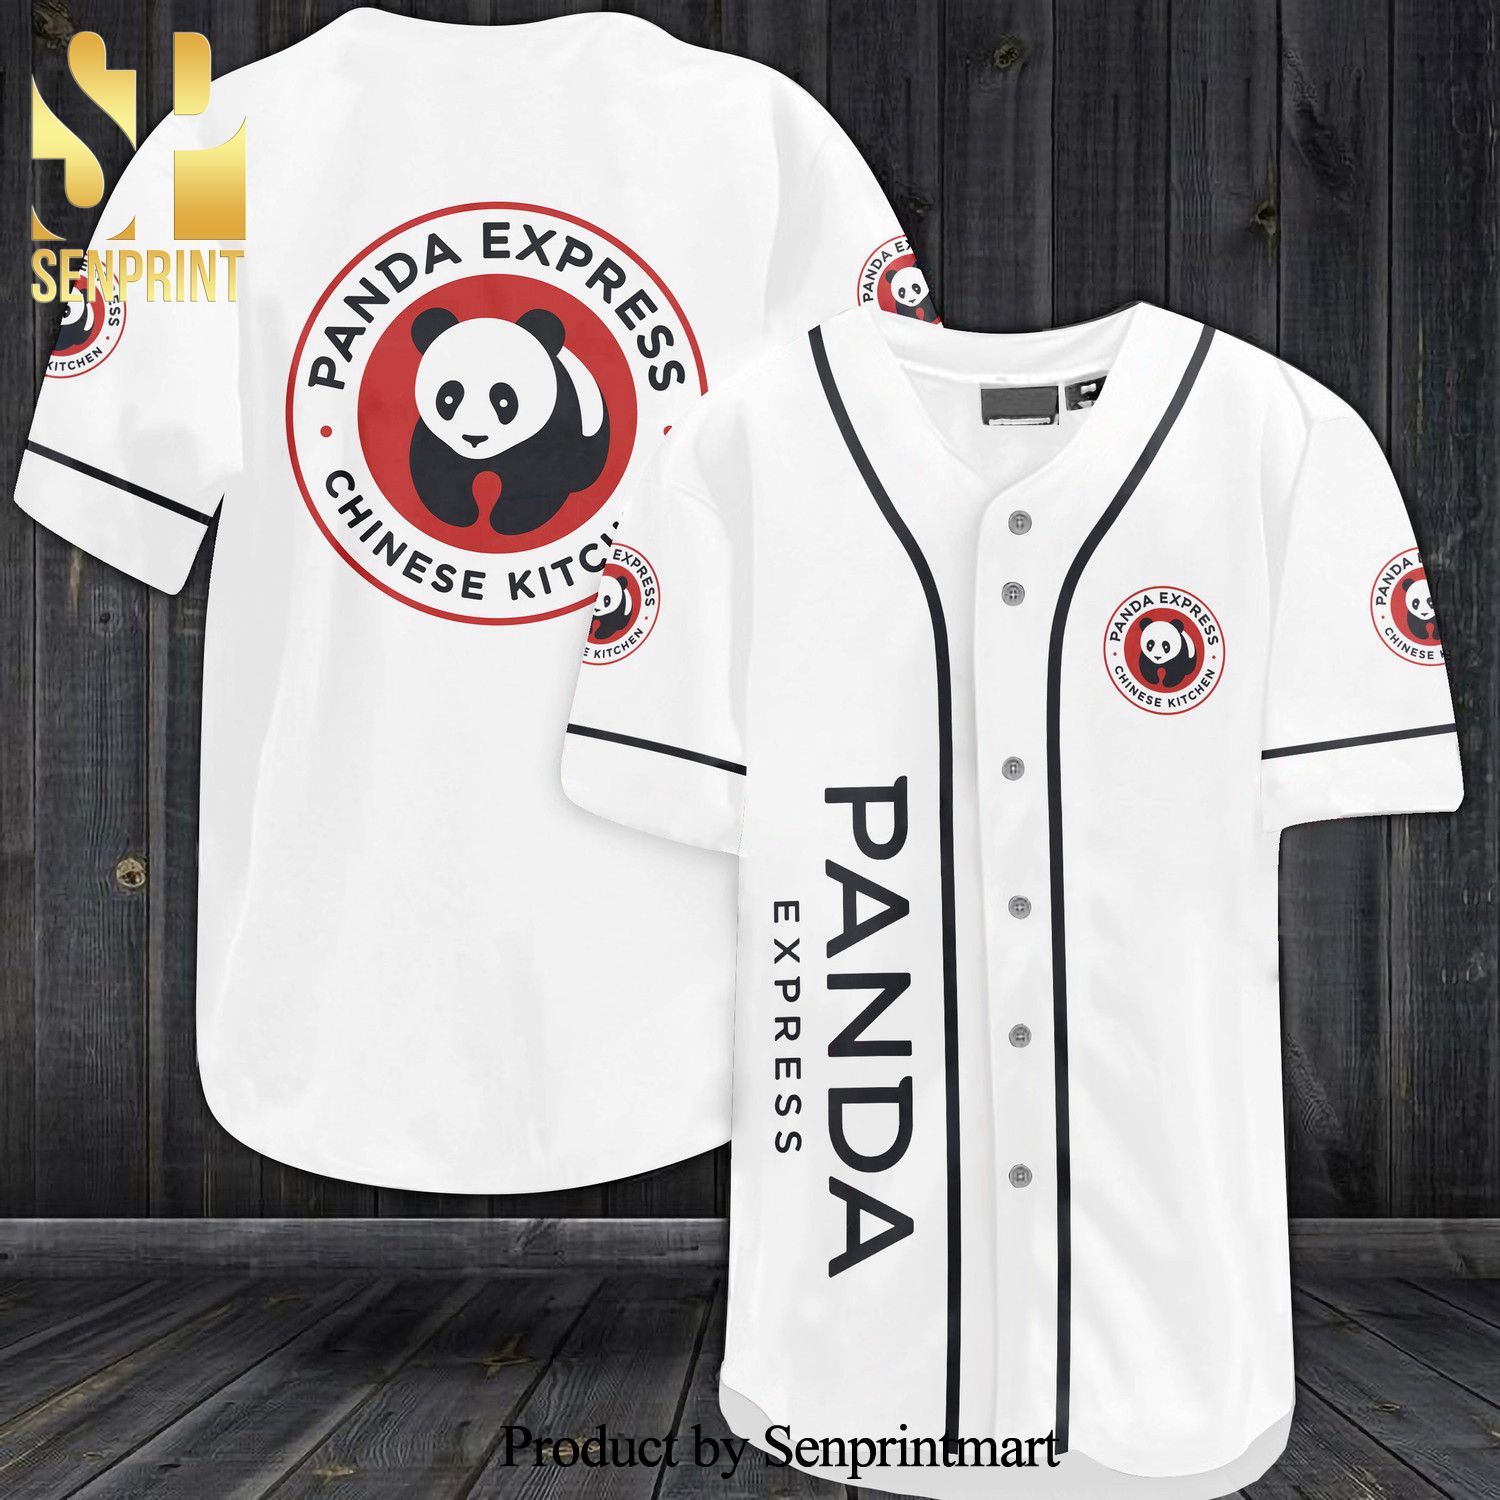 Panda Express All Over Print Baseball Jersey -White